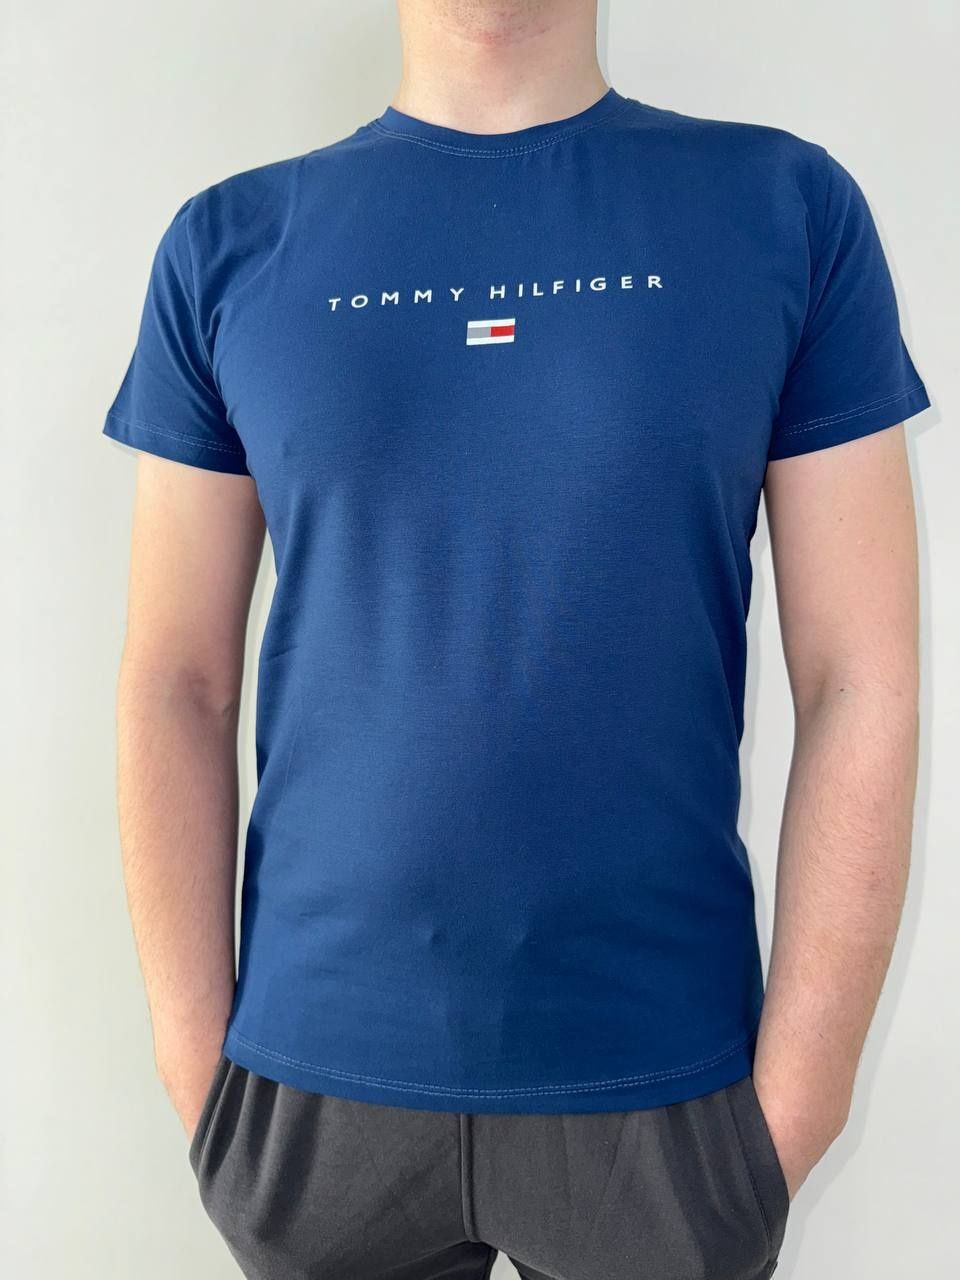 Новая футболка Tommy Hilfiger унисекс